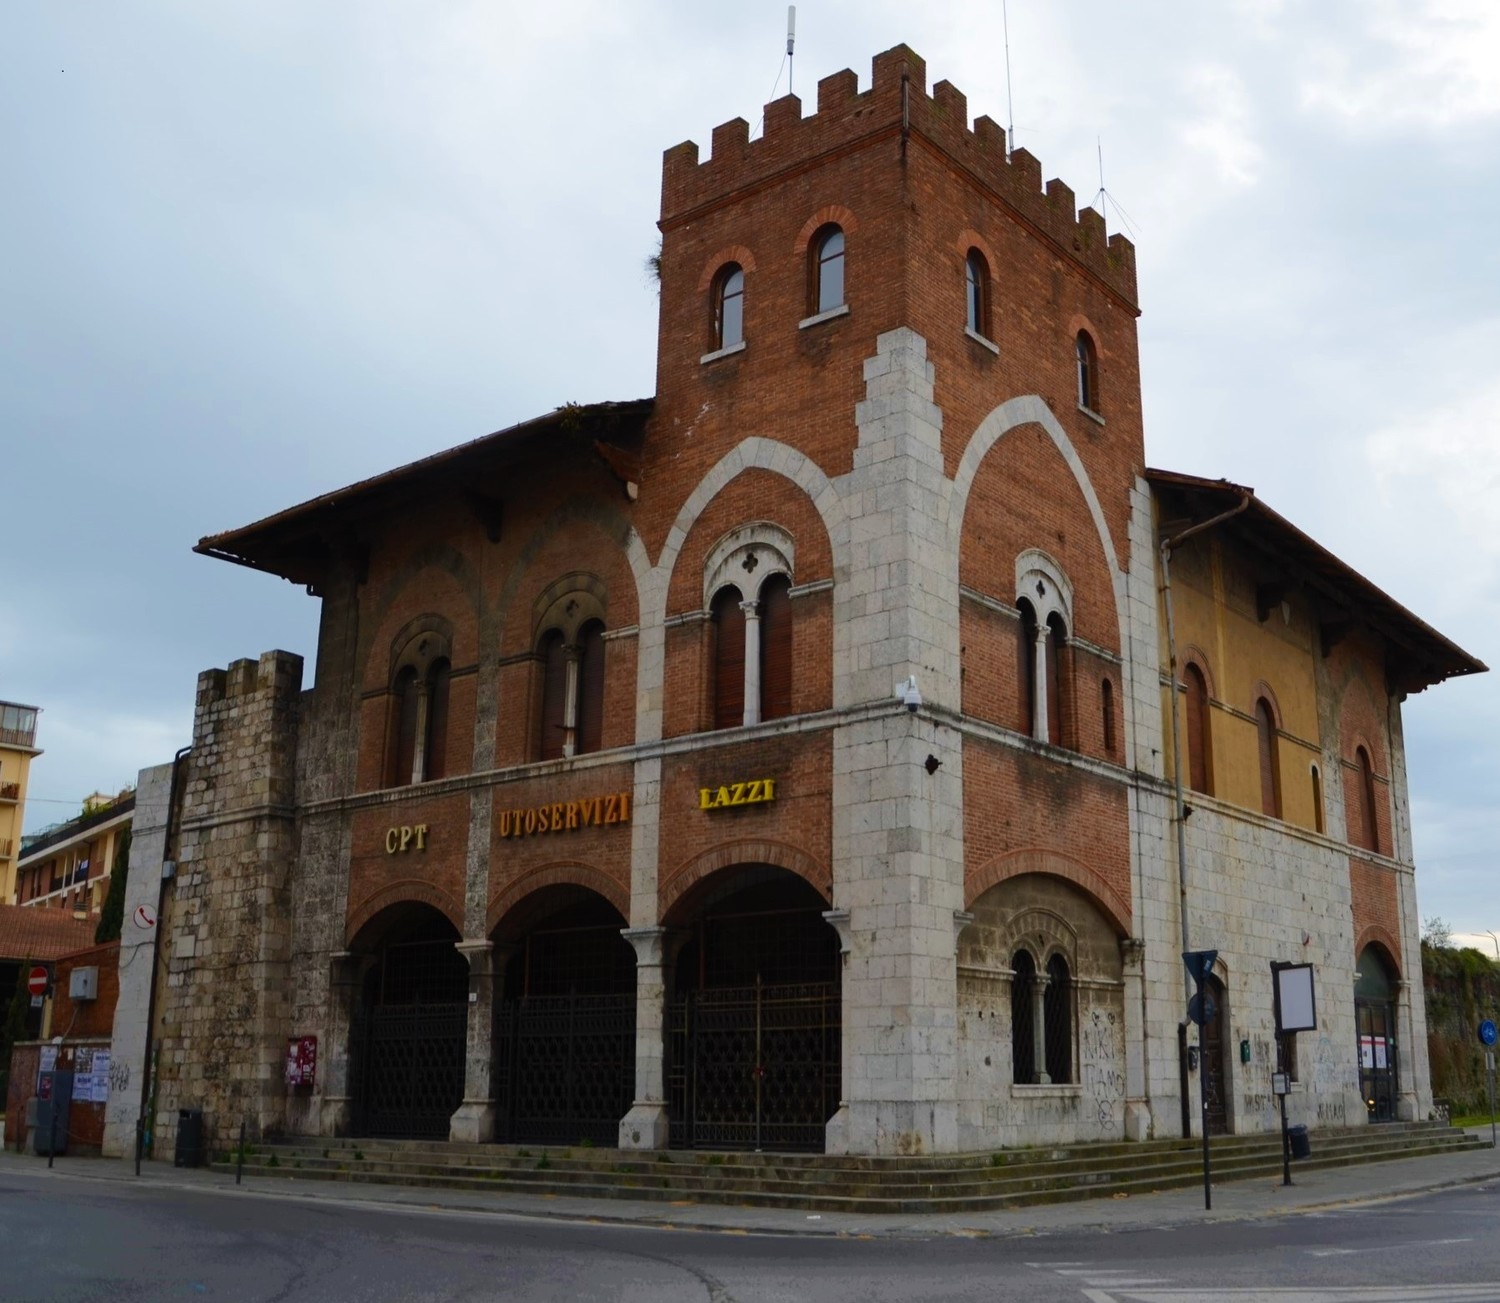 Ex stazione C.P.T. (L. Corevi, Comune di Pisa)